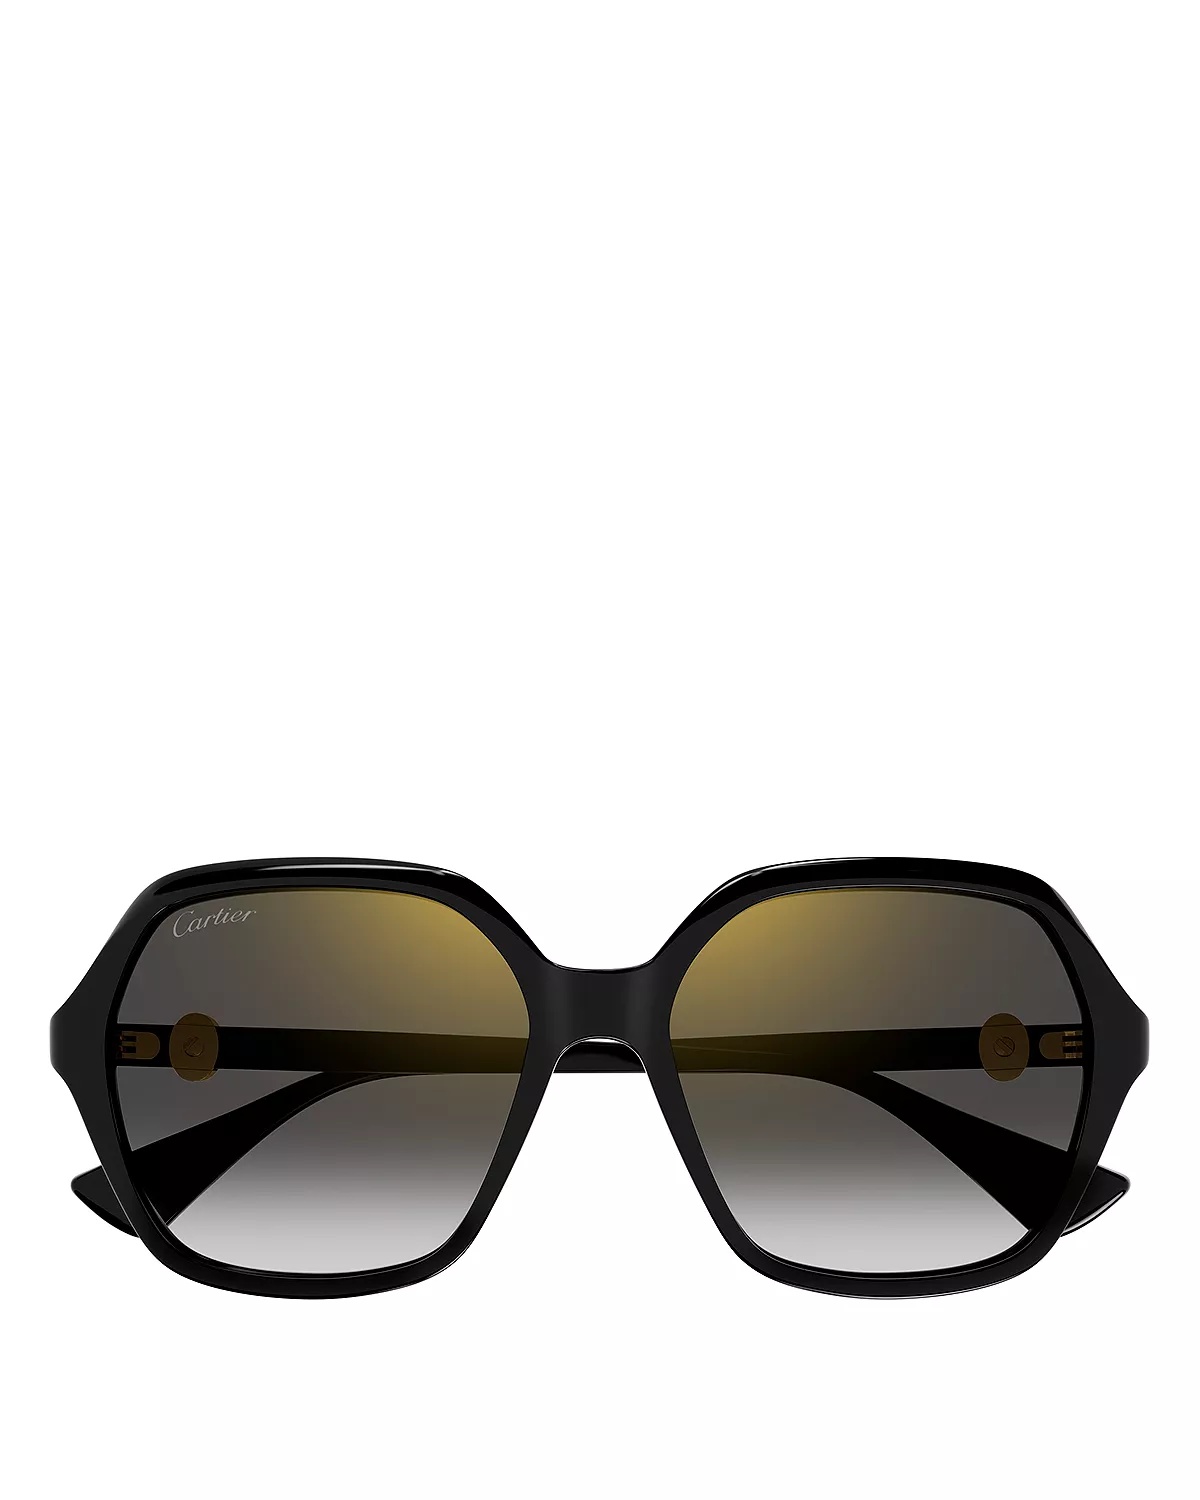 Double C Squared Sunglasses, 57mm - 2